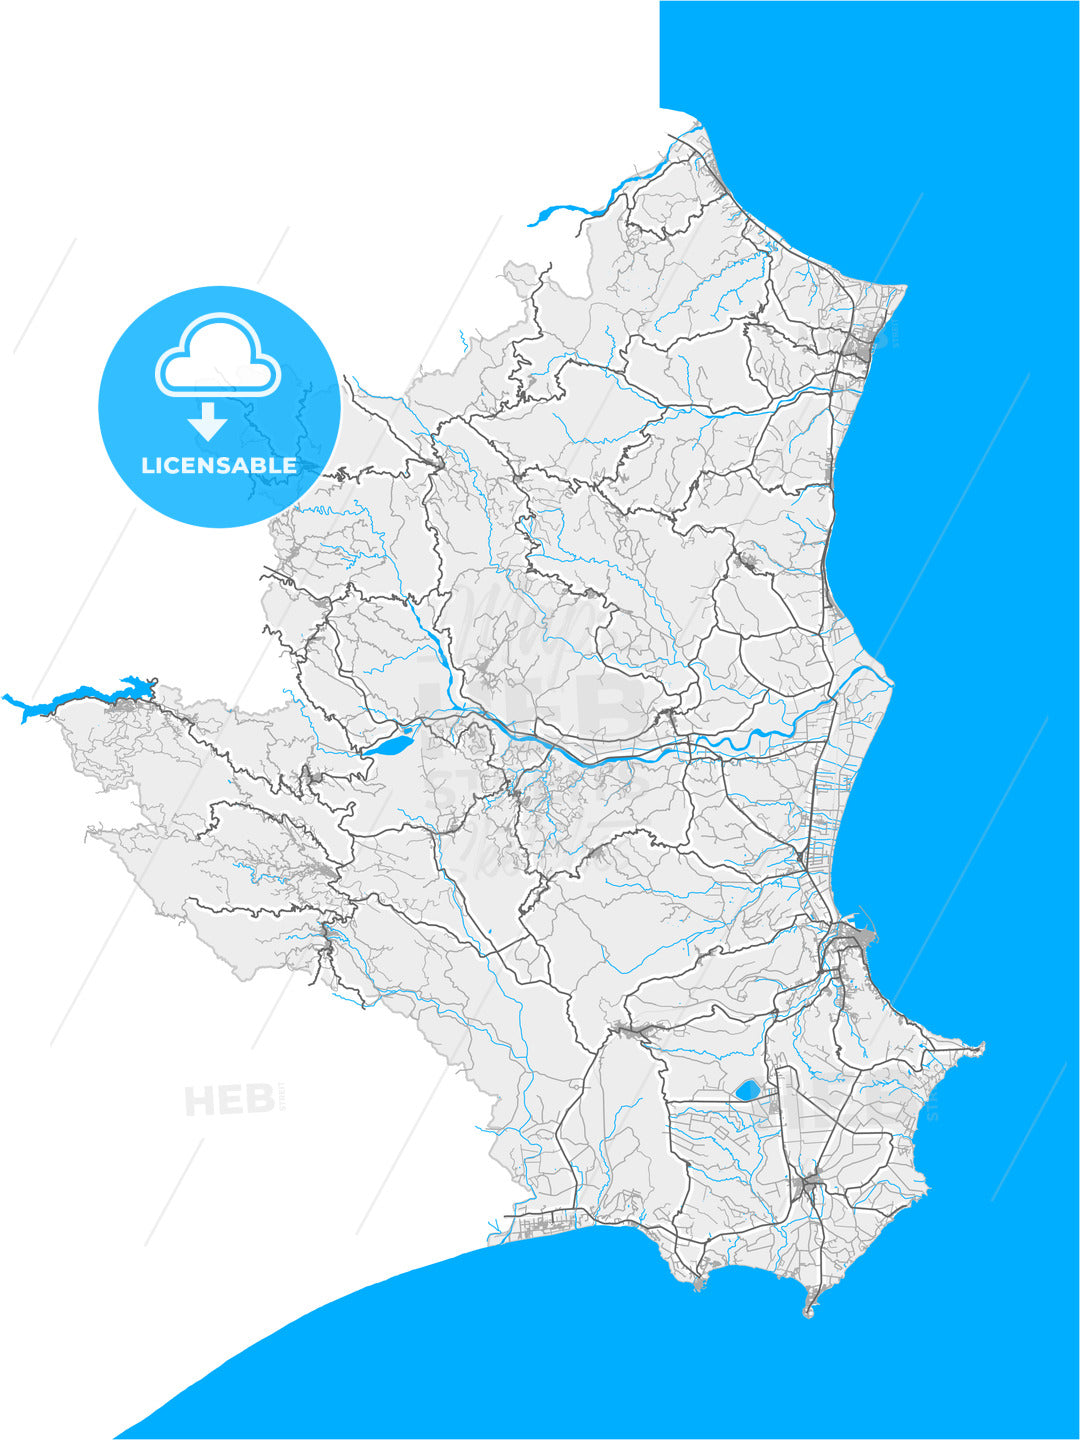 Crotone, Calabria, Italy, high quality vector map